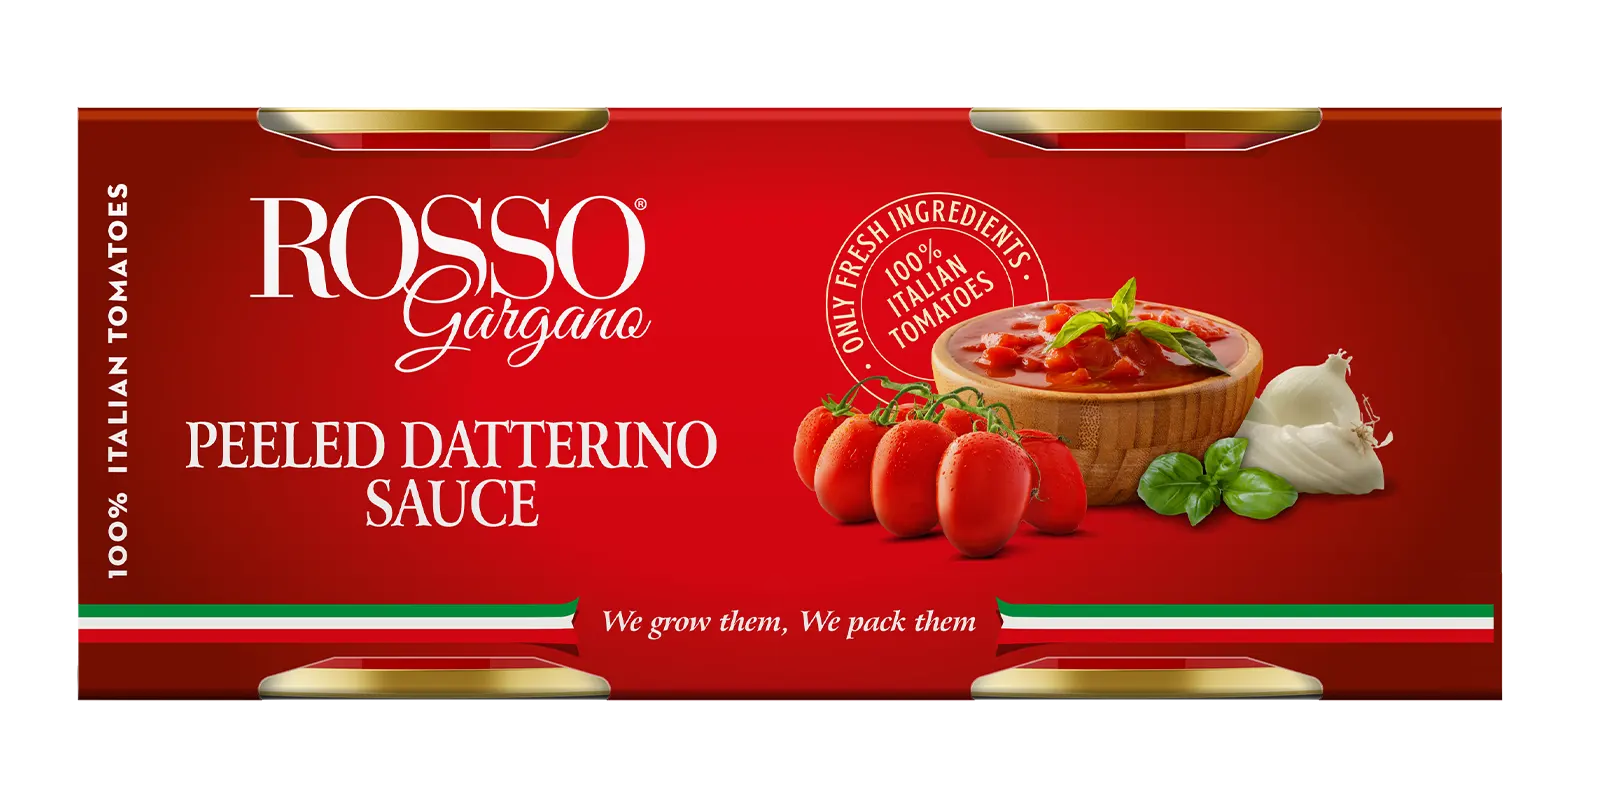 Peeled Datterino Sauce - Rosso Gargano